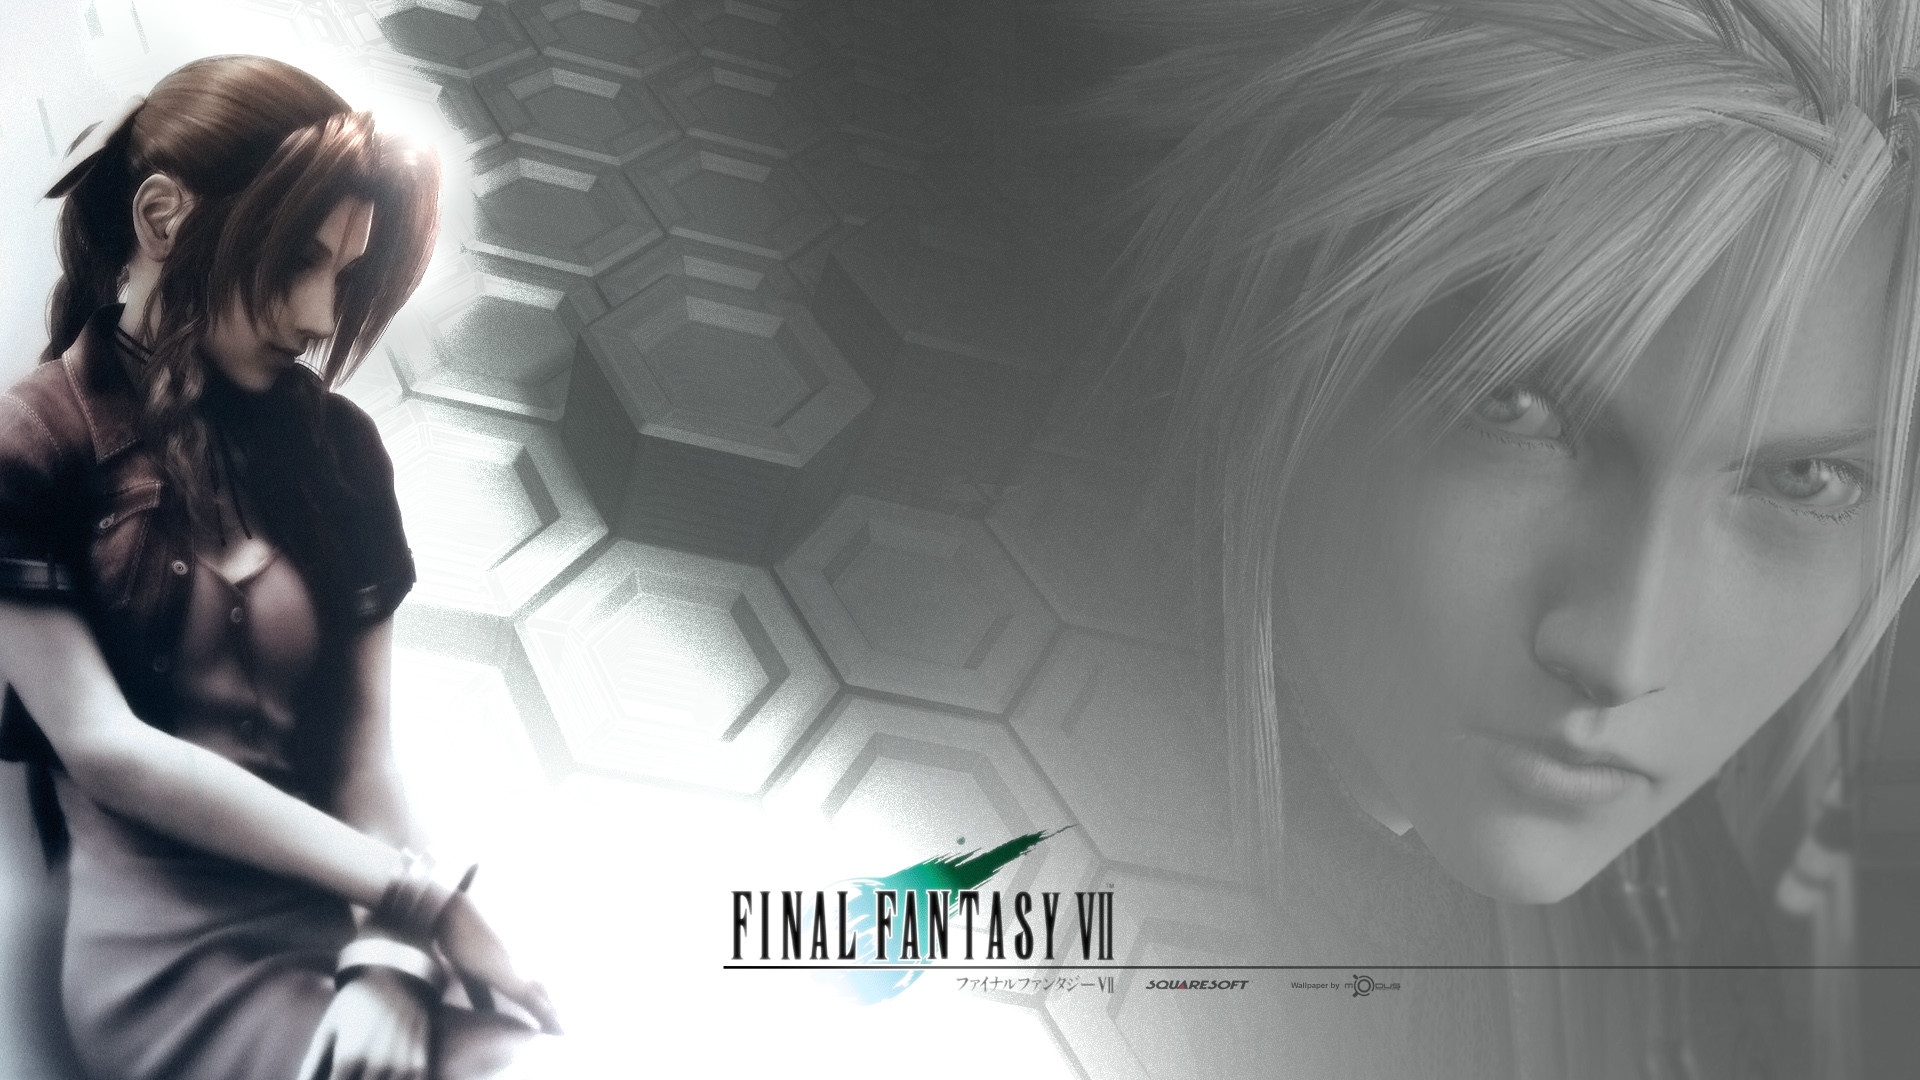 1920x1080 Final Fantasy VII Â· download Final Fantasy VII image